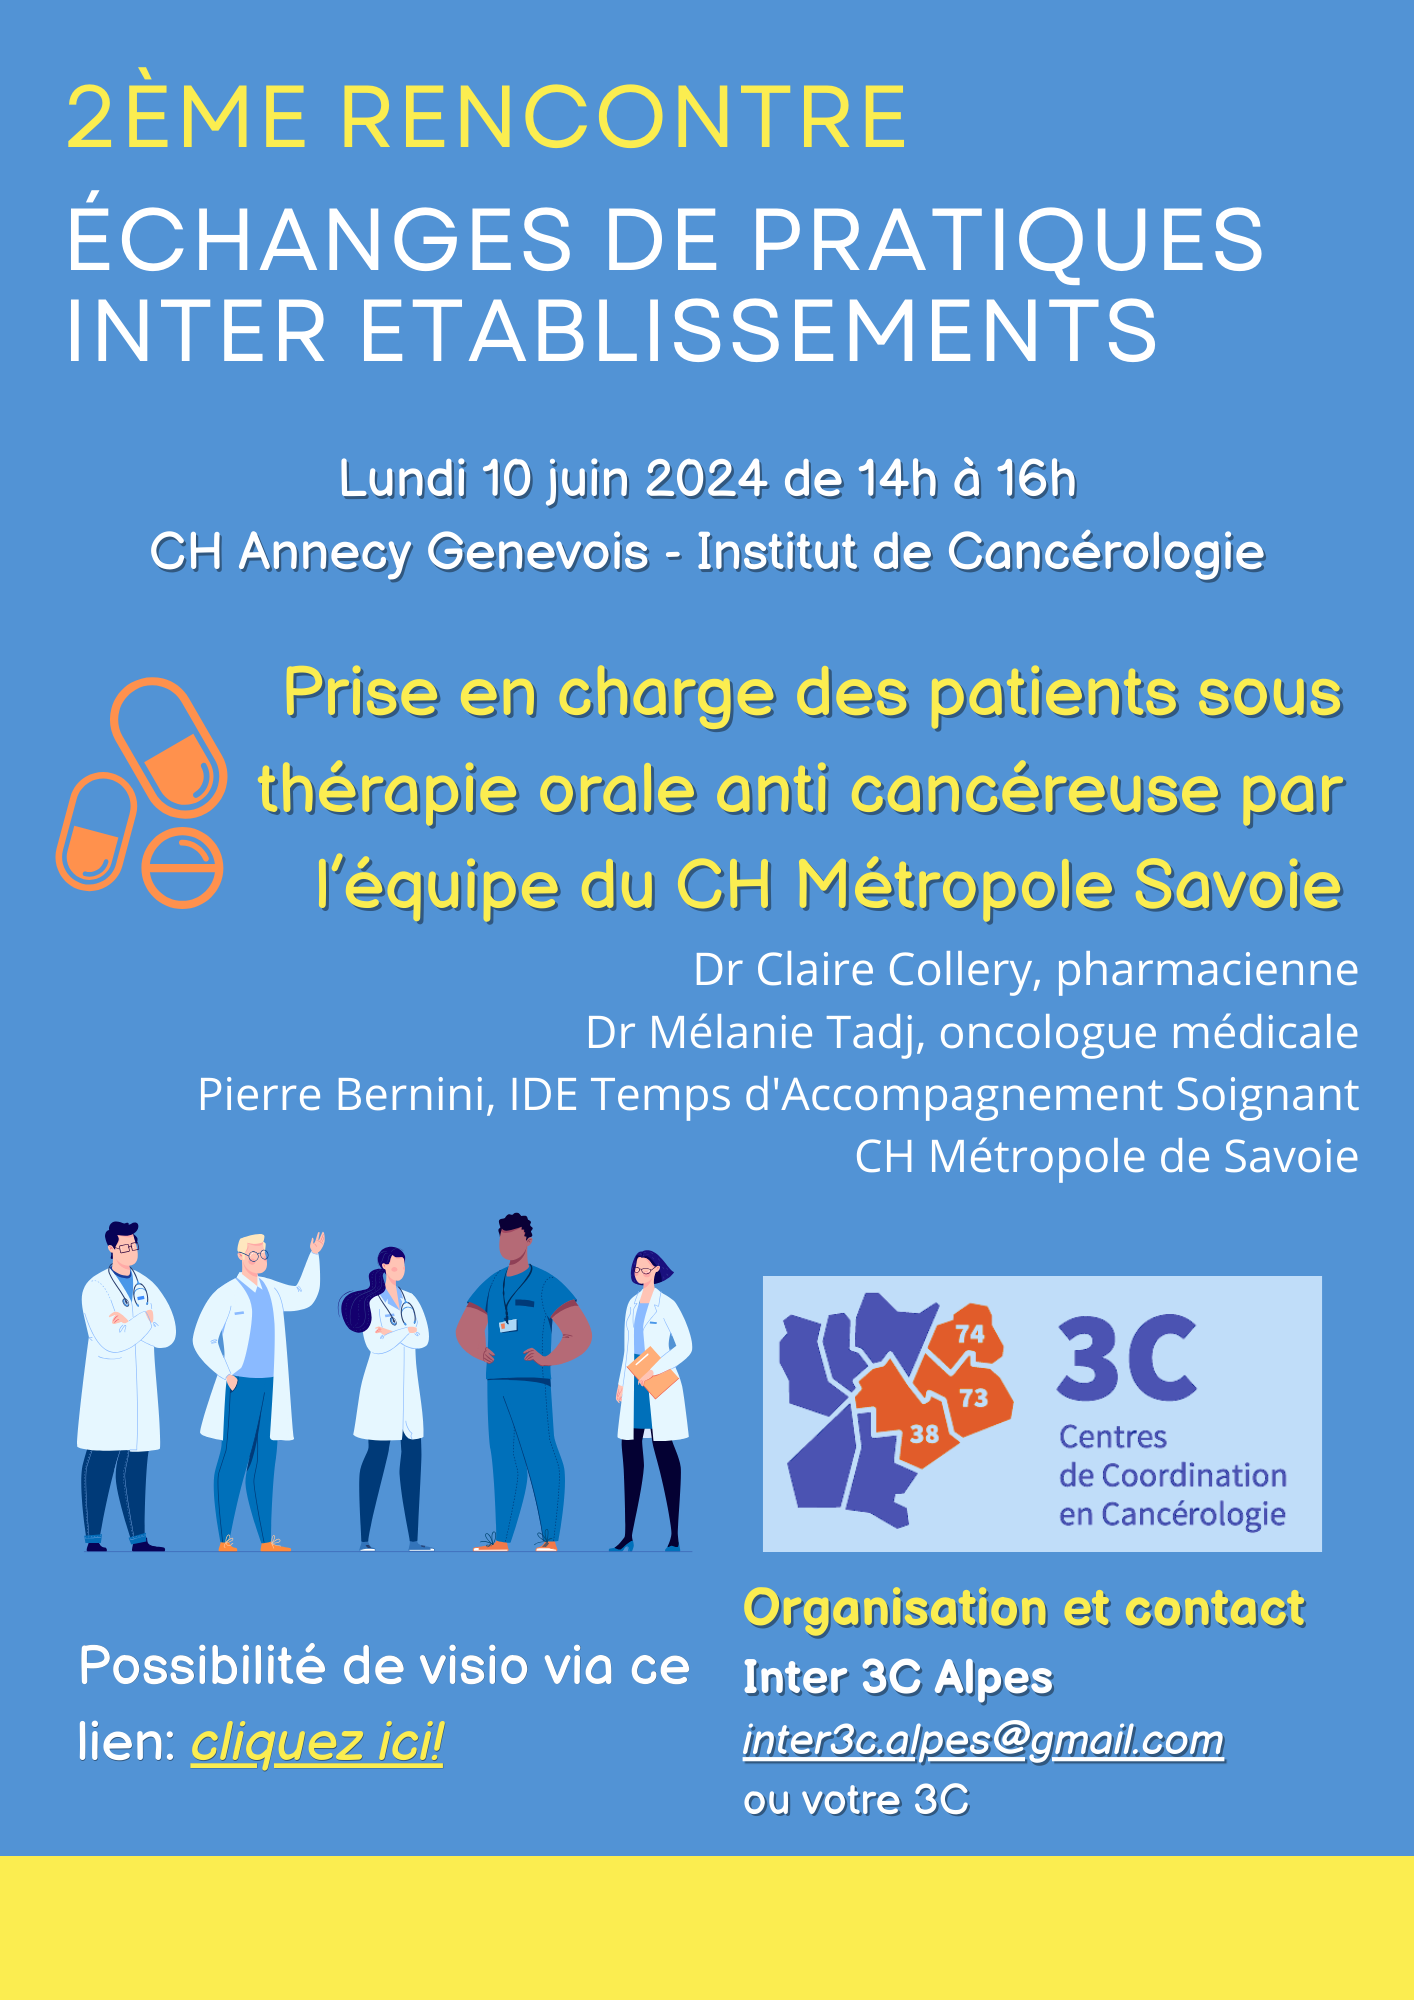 Rencontre-inter-etablissement-pharma_-2eme-reunion-du-10-juin-2024-1